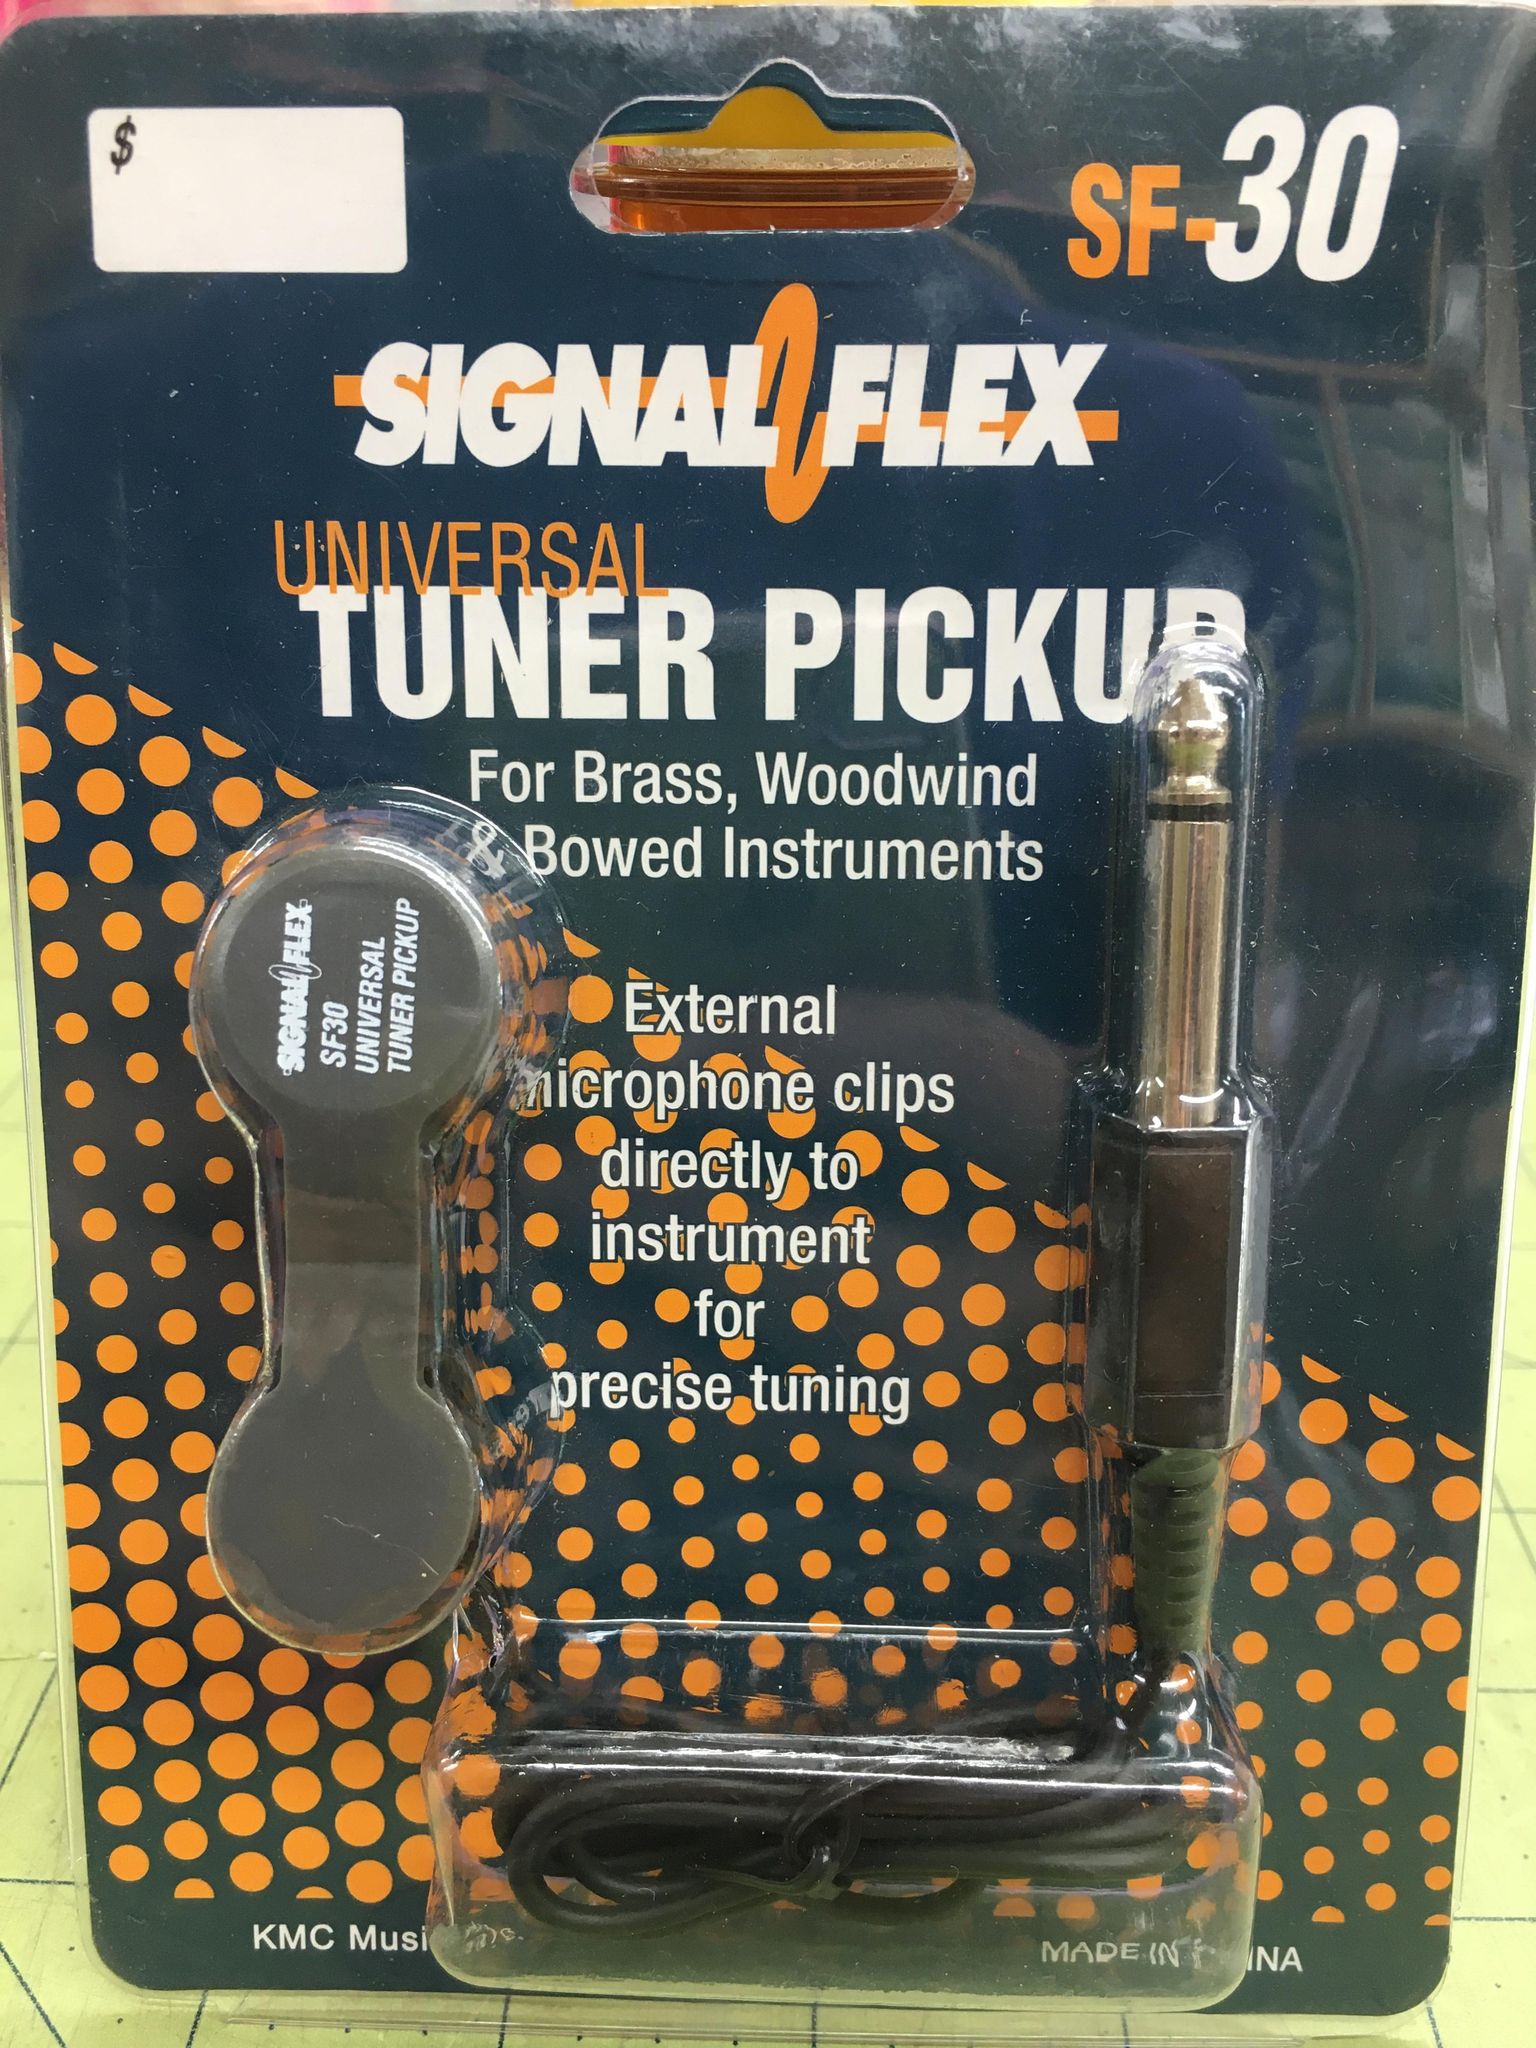 Signal flex tuner pickup.